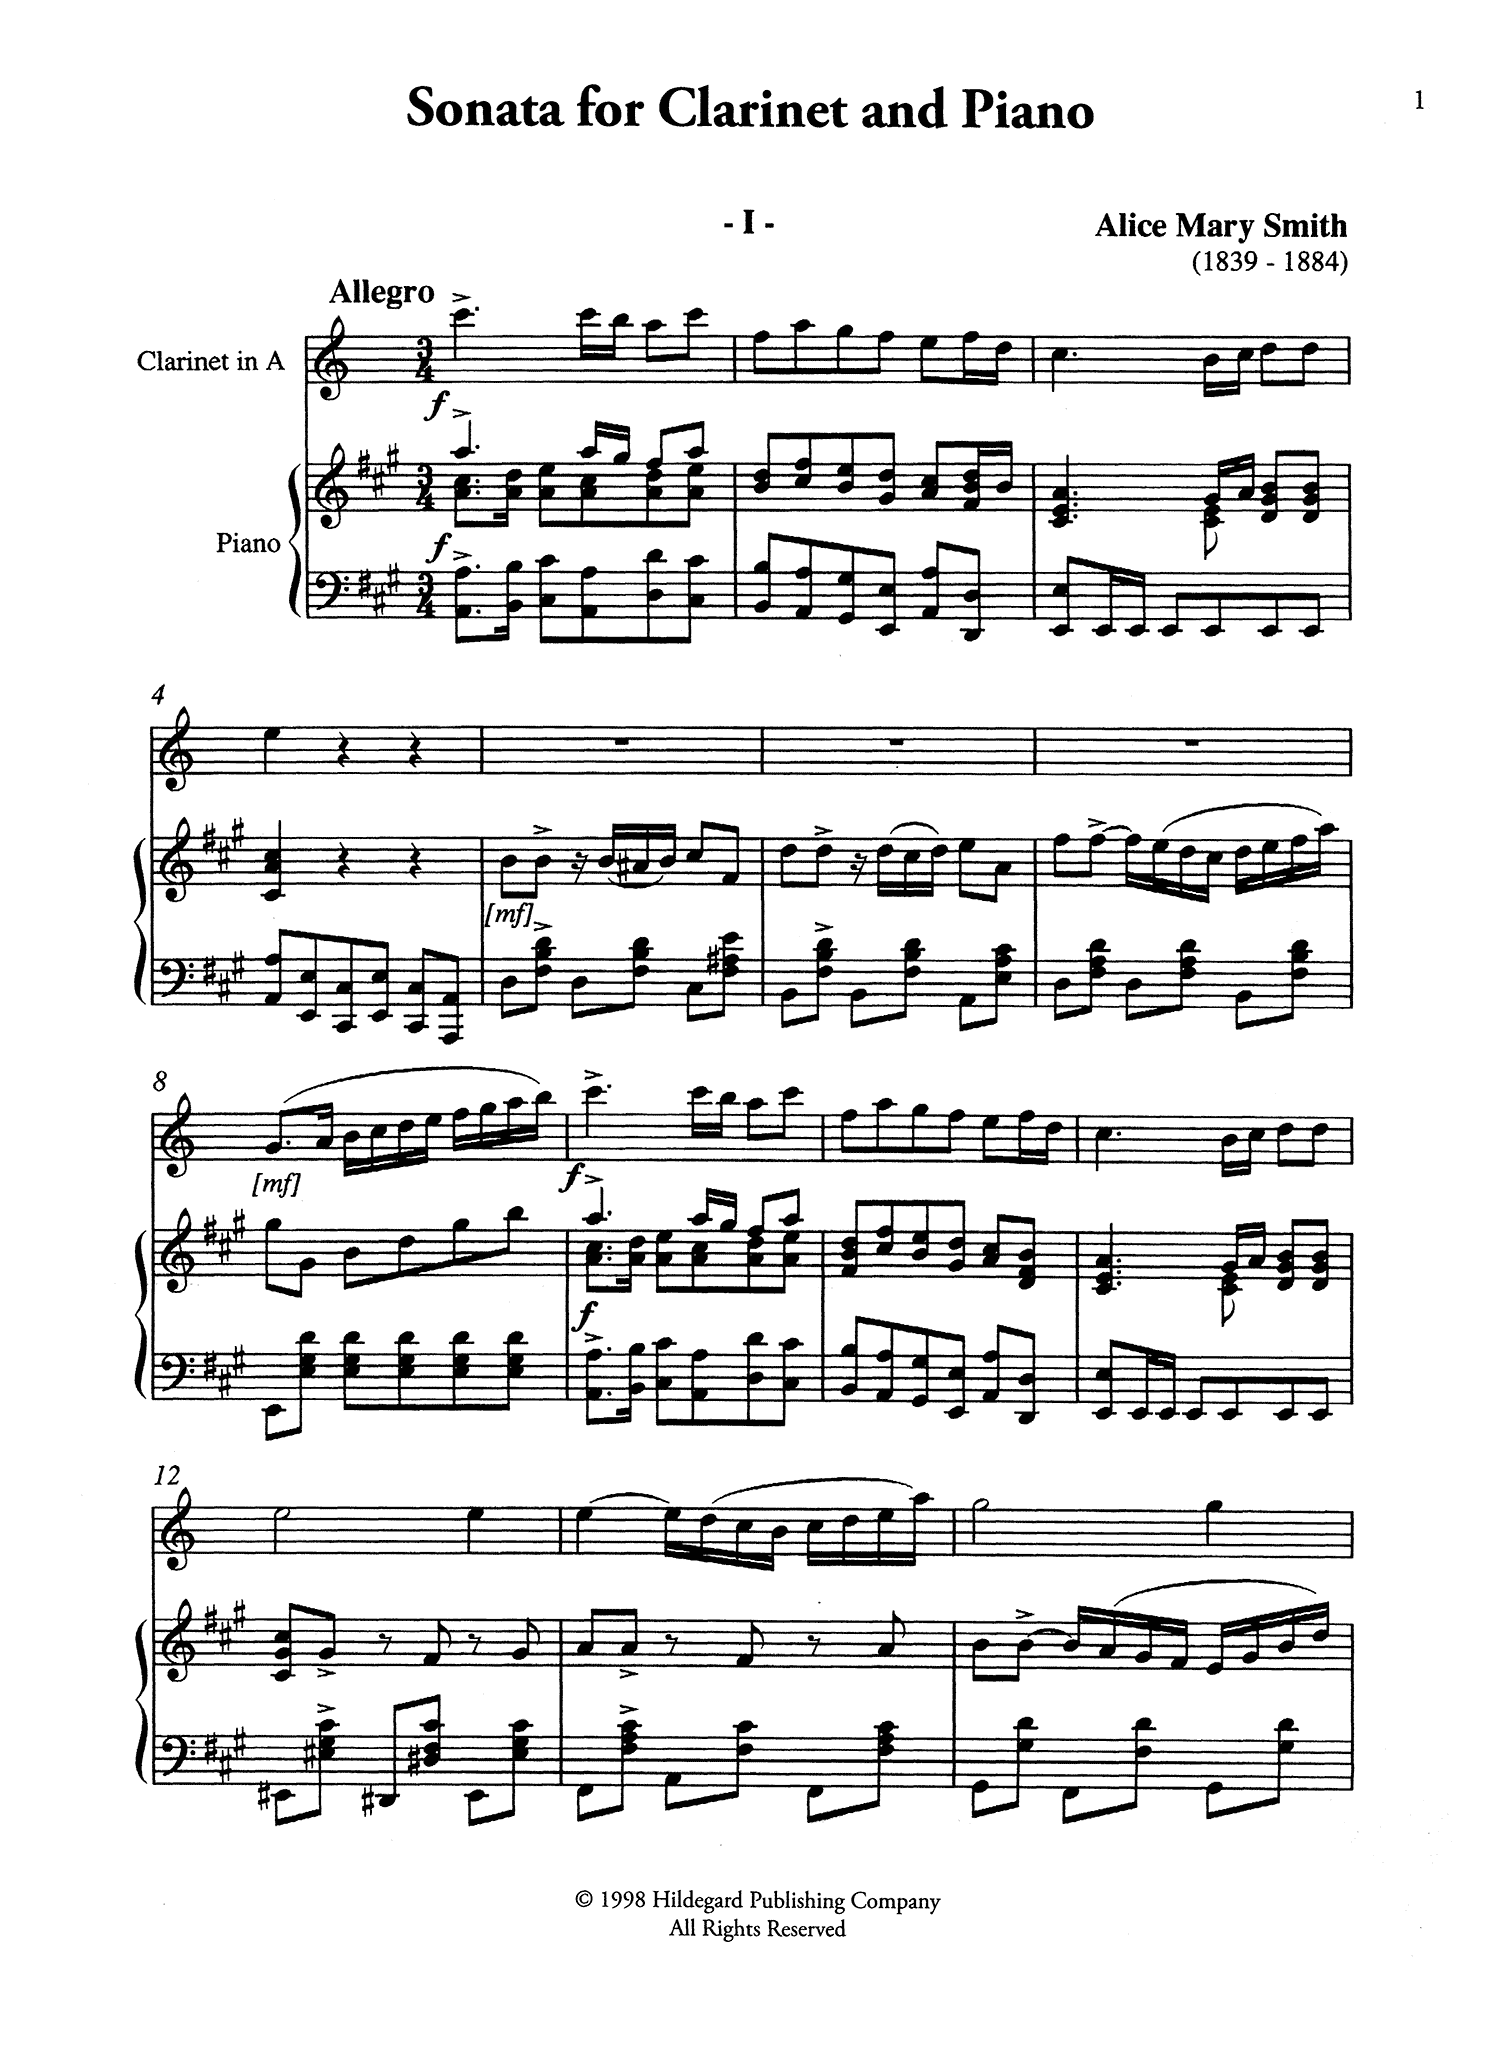 Smith Sonata for Clarinet & Piano - Movement 1